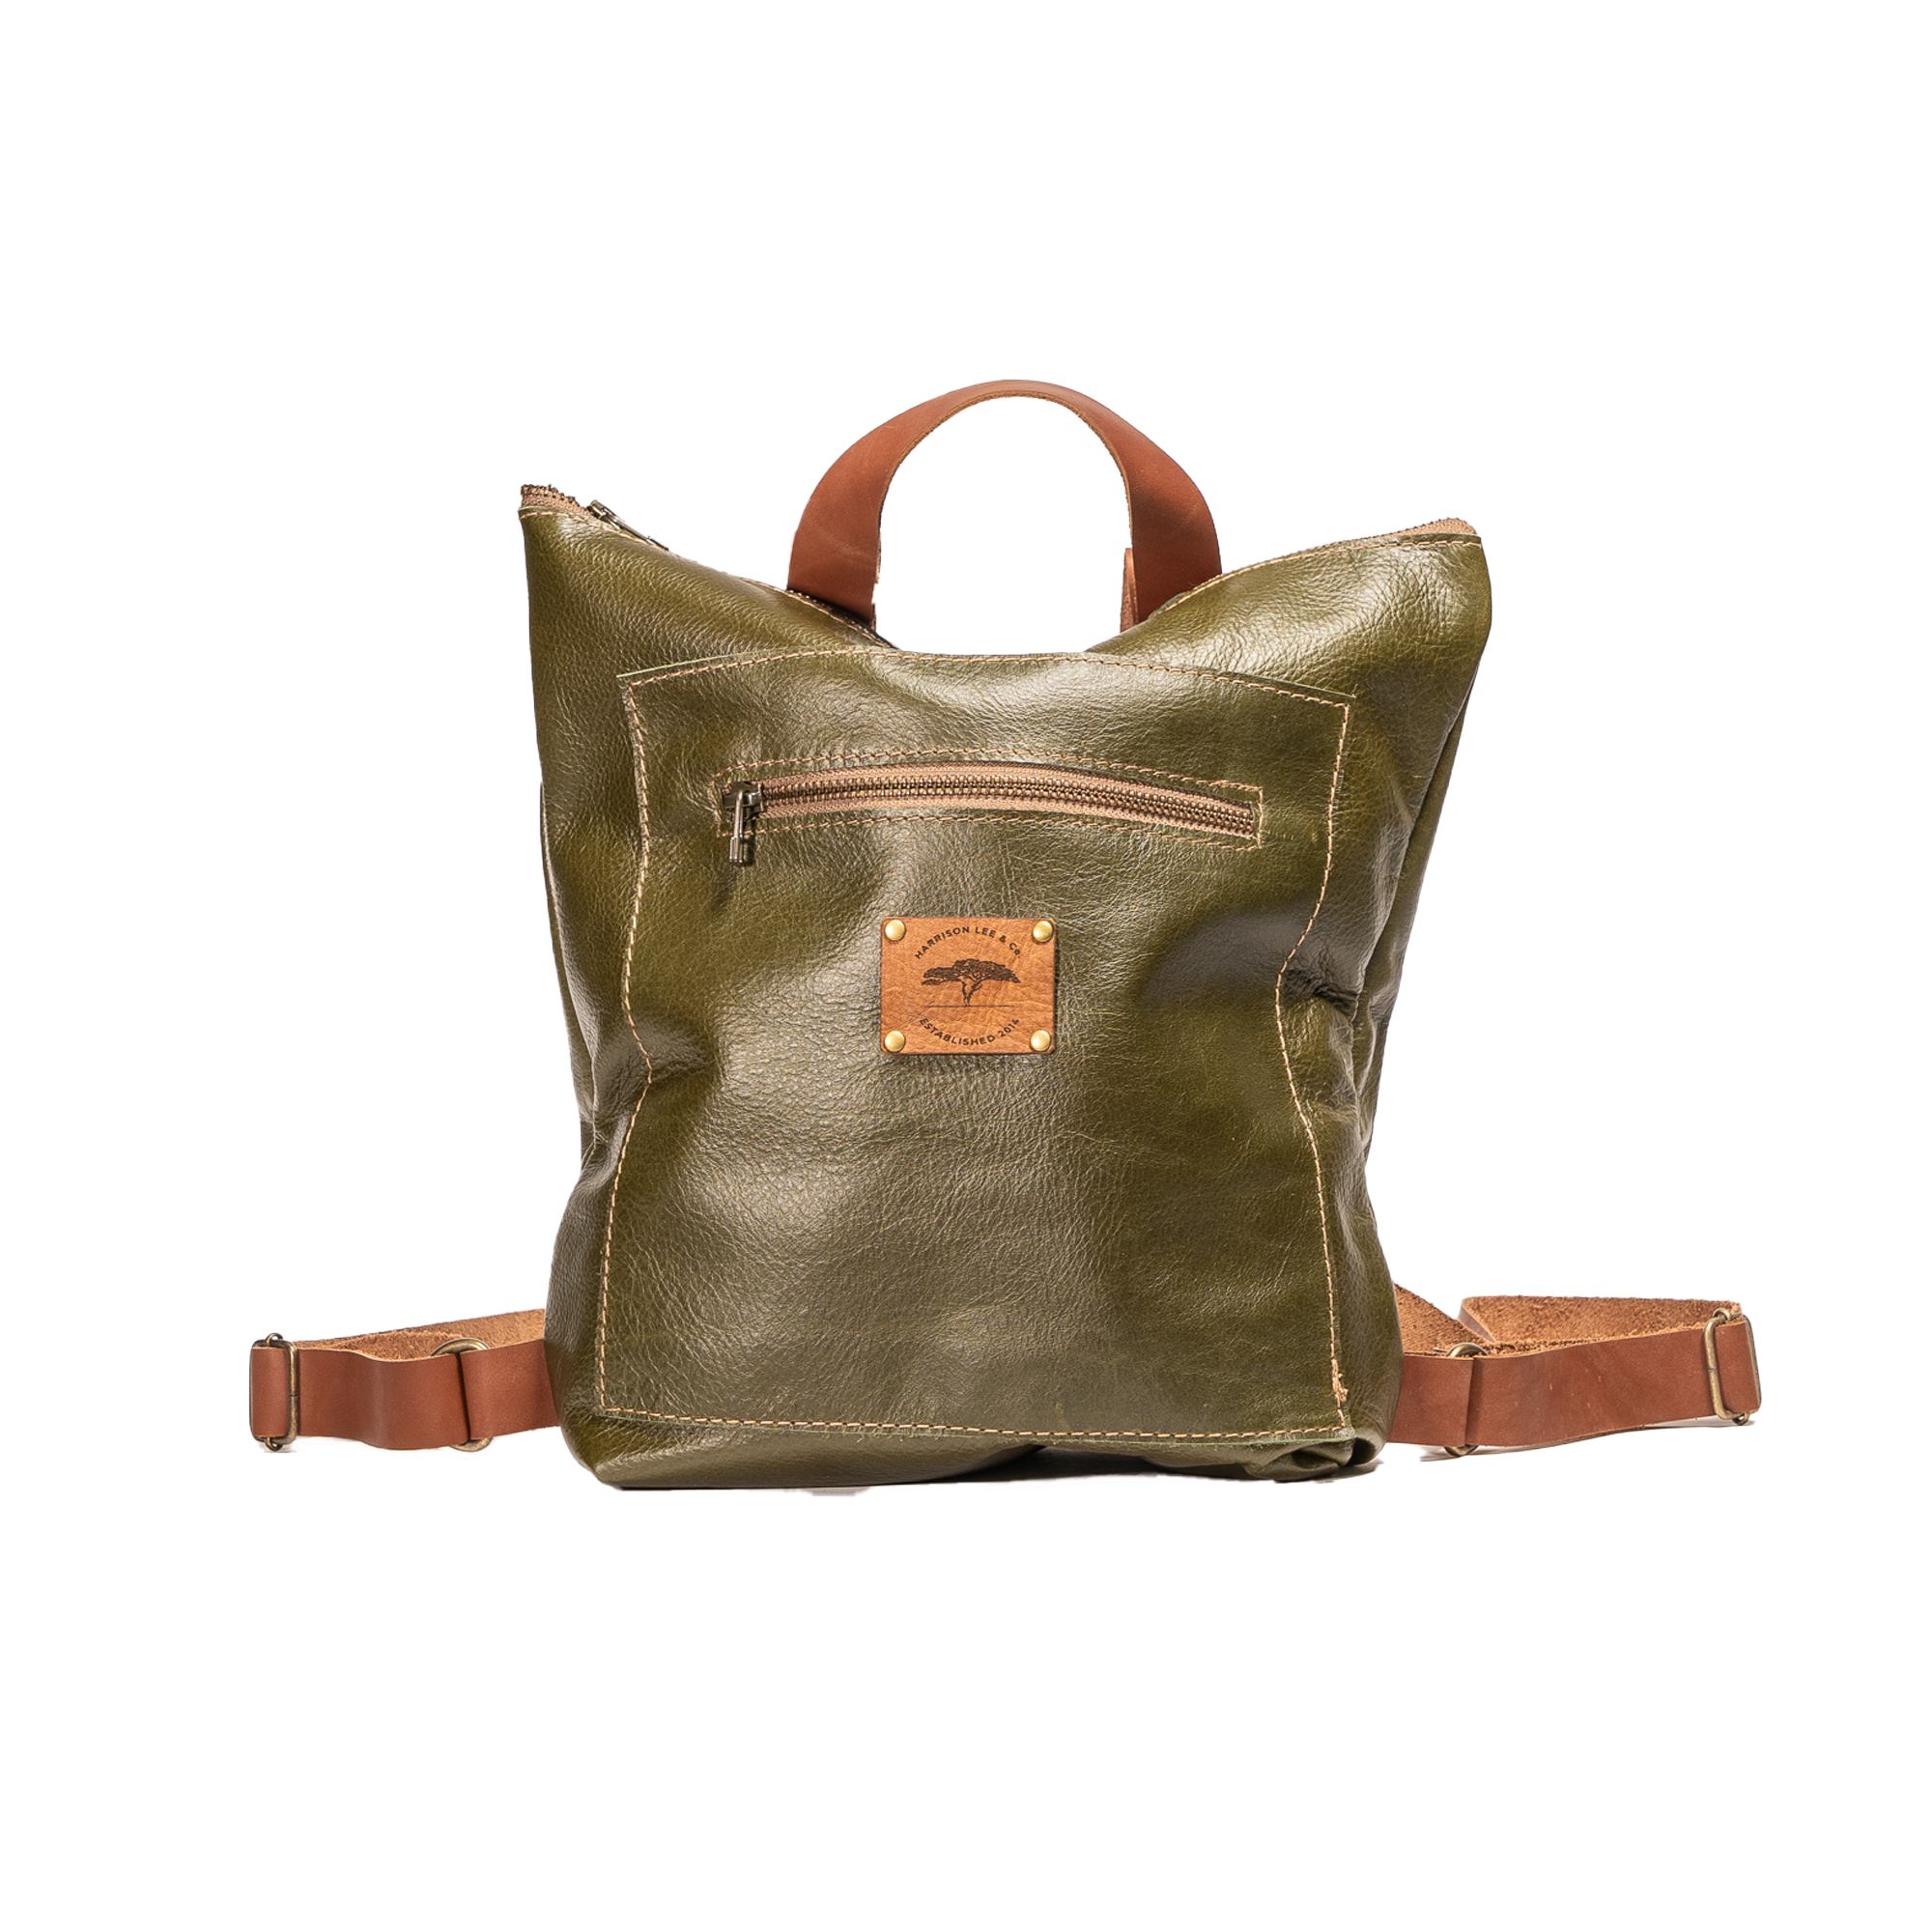 Handmade Leather Backpack